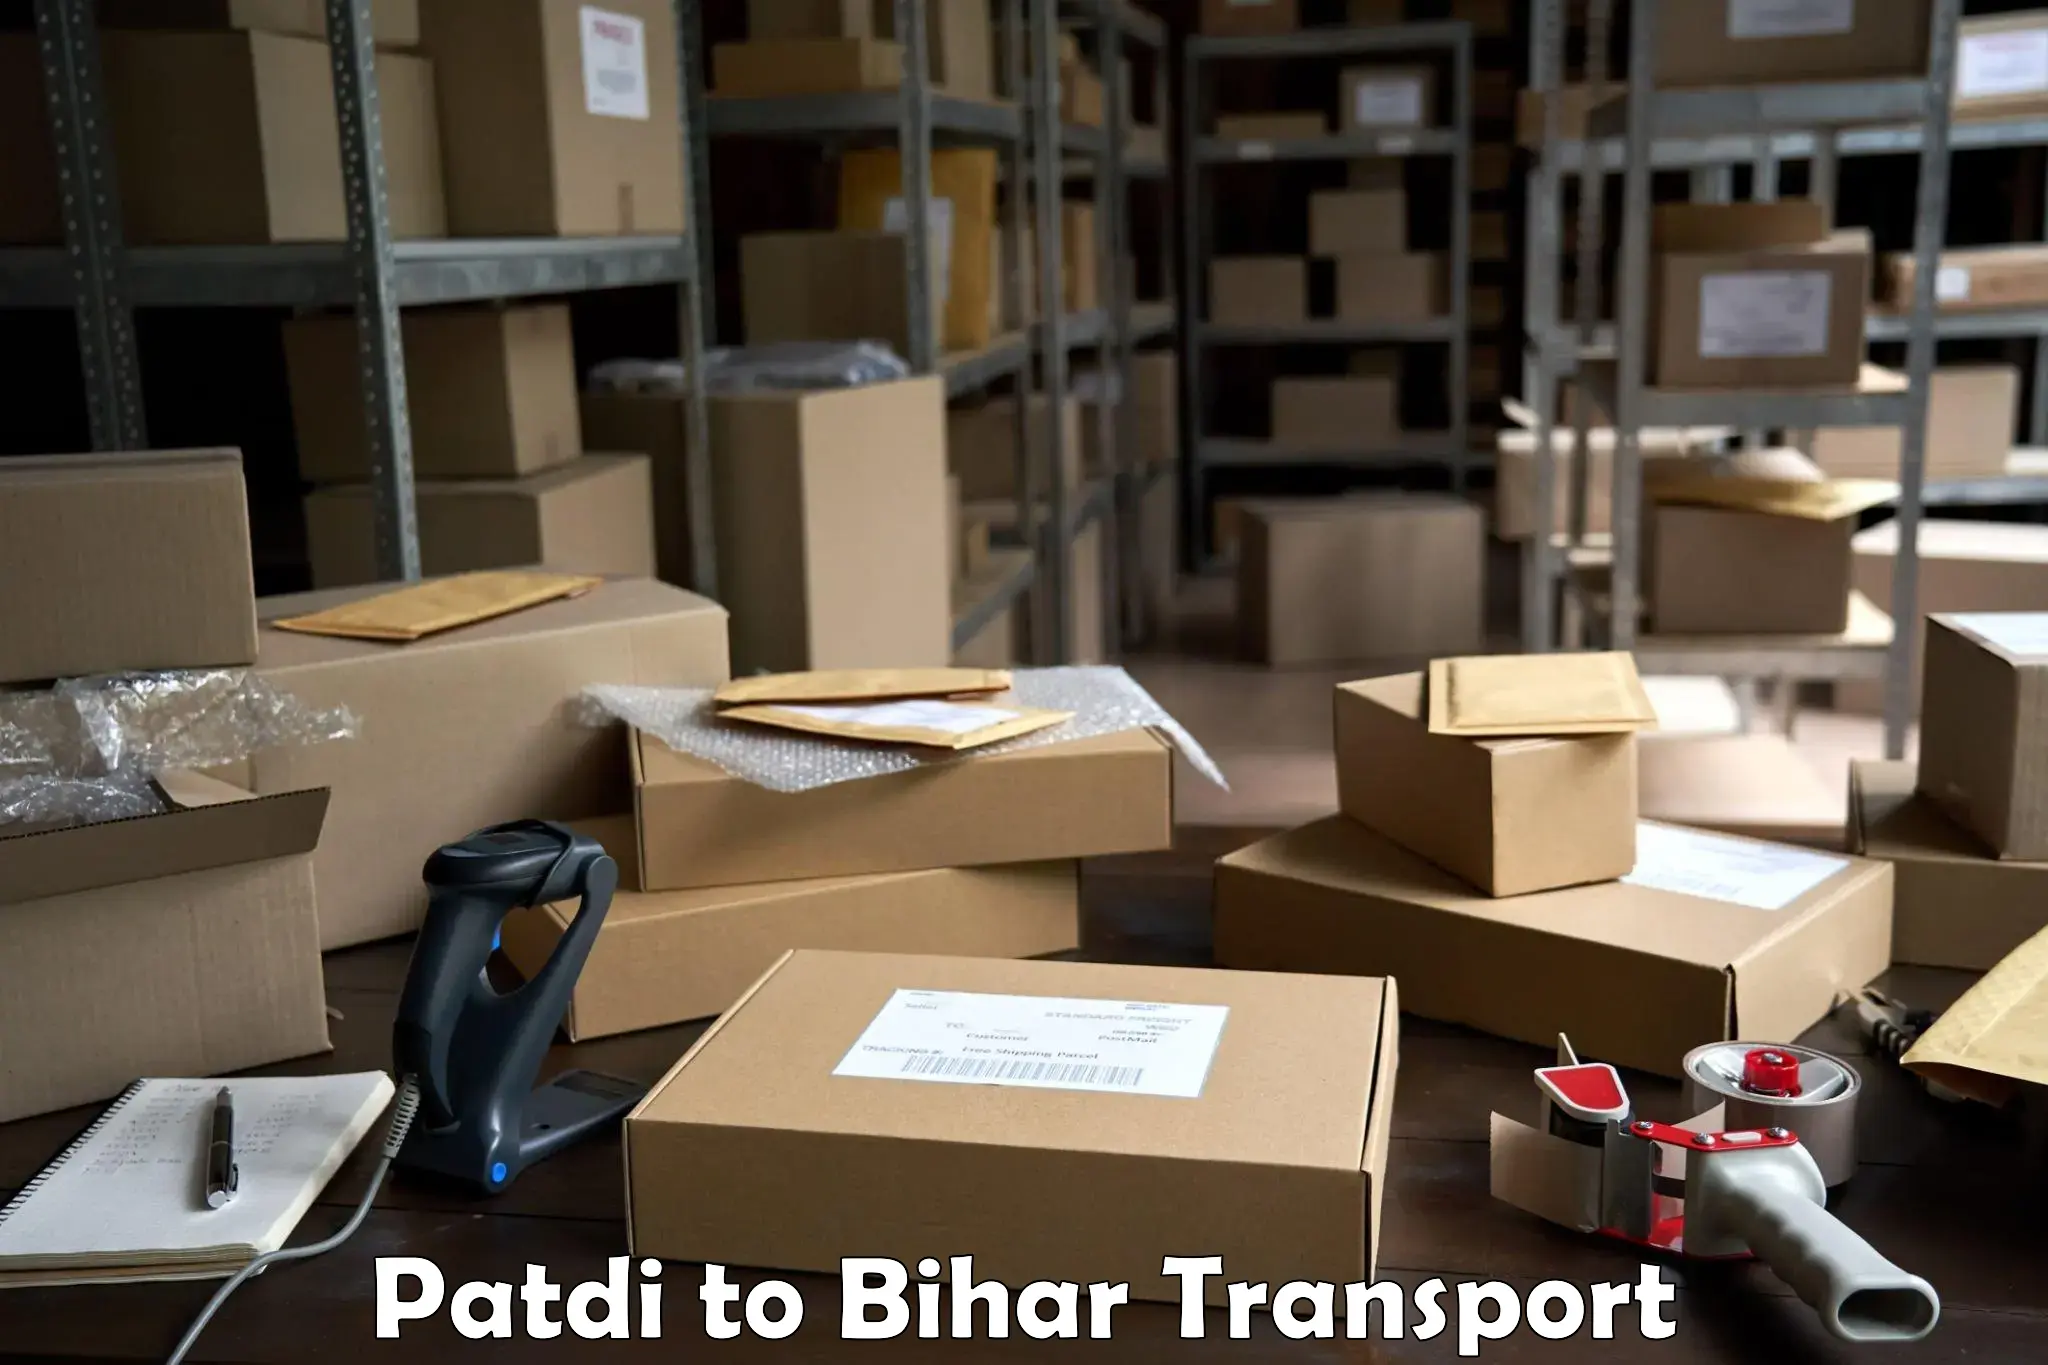 Truck transport companies in India Patdi to Bihar